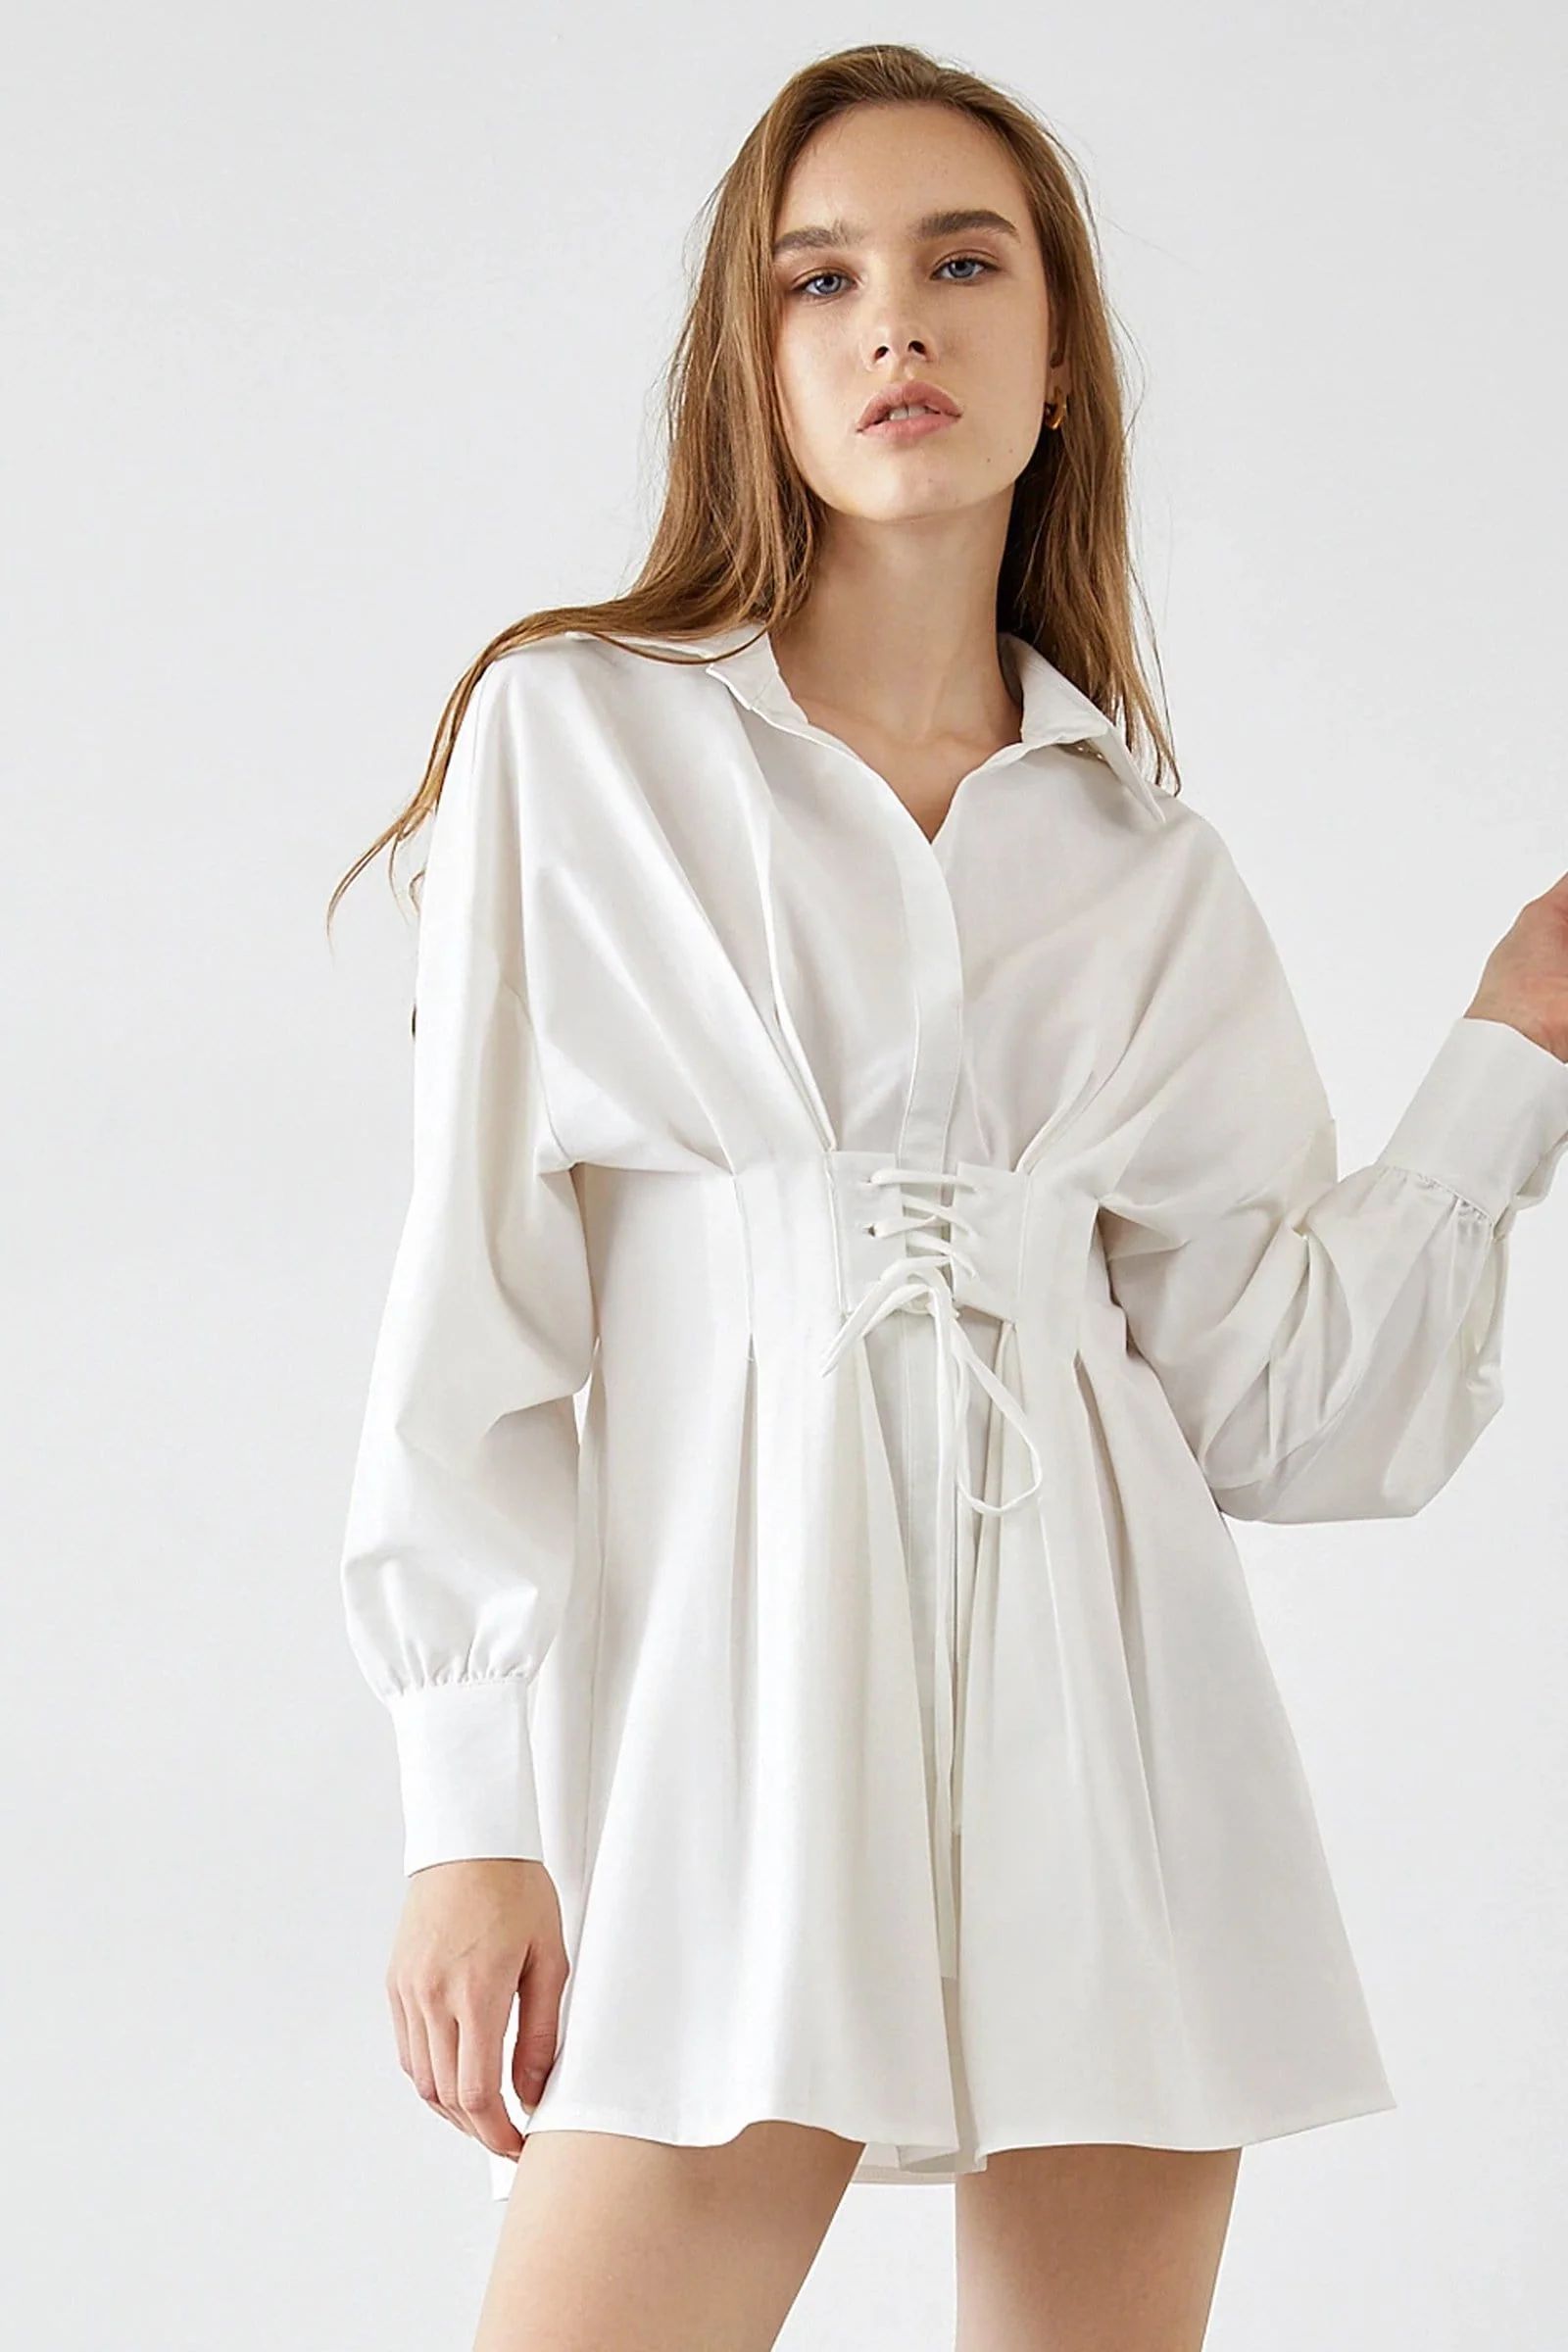 Adalie White Cinched Waist Shirt Dress | J.ING